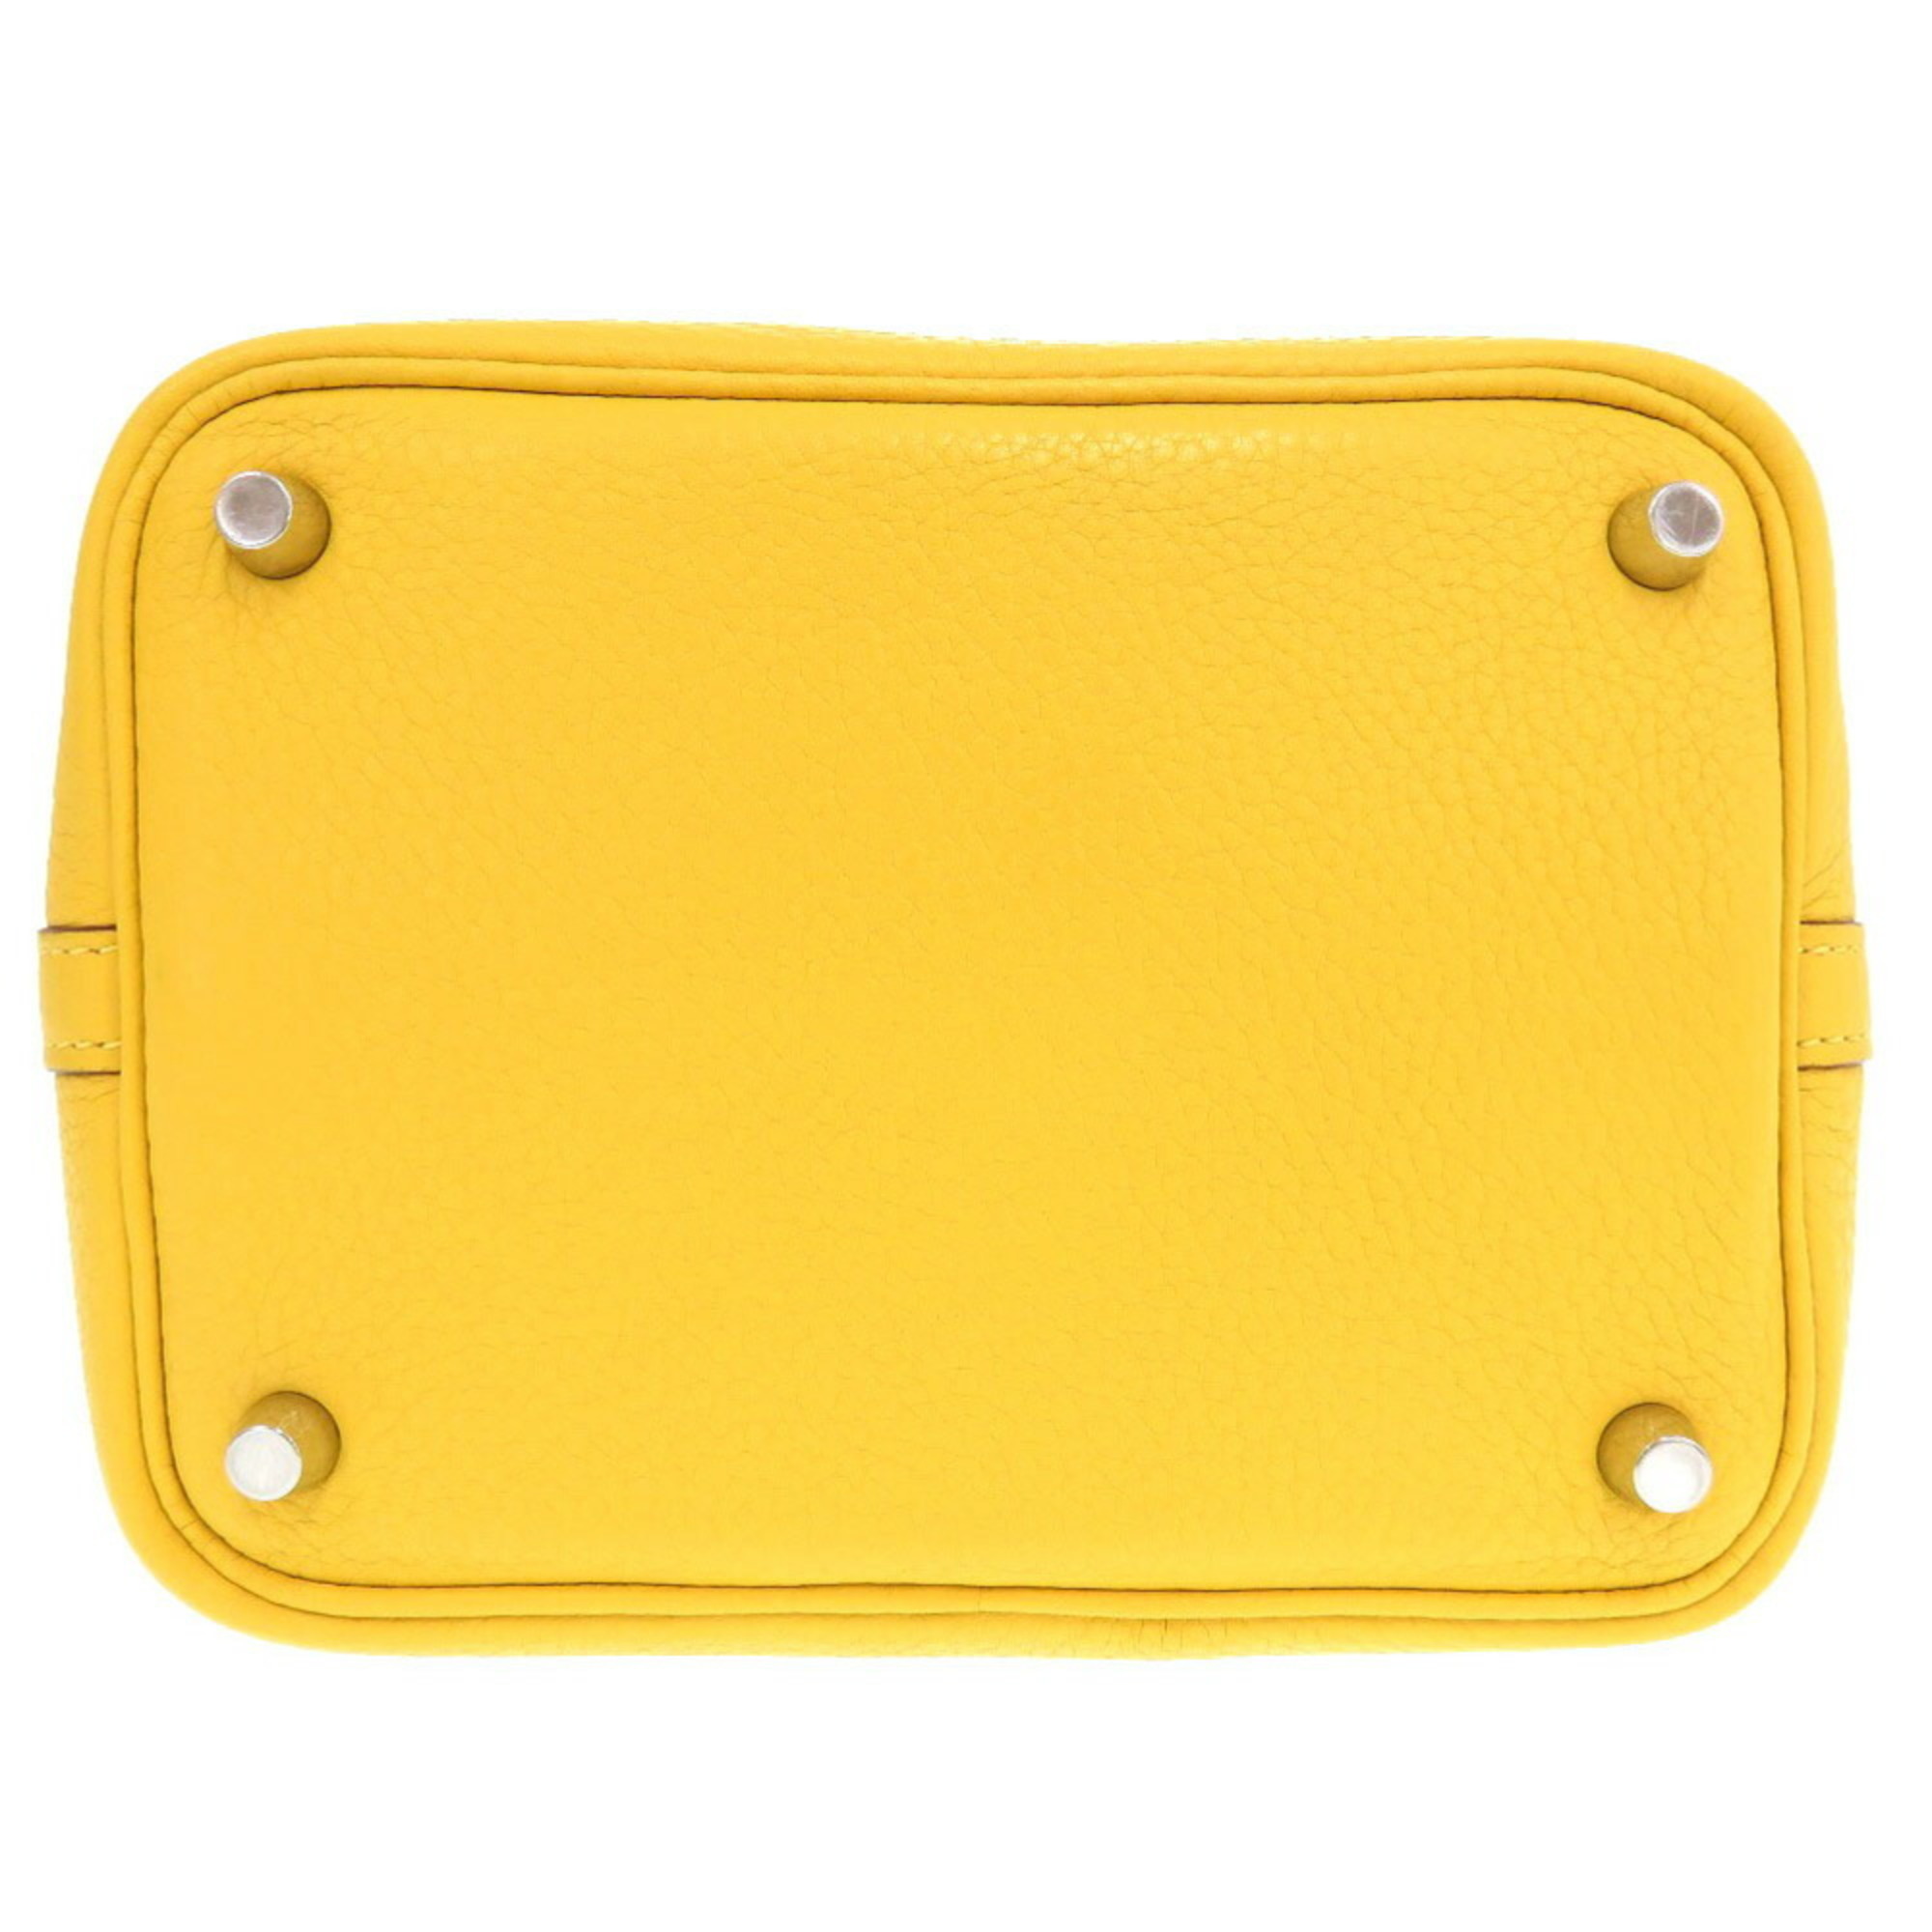 Hermes Picotin Lock PM Taurillon Clemence Soleil □M stamped handbag yellow 1504 HERMES